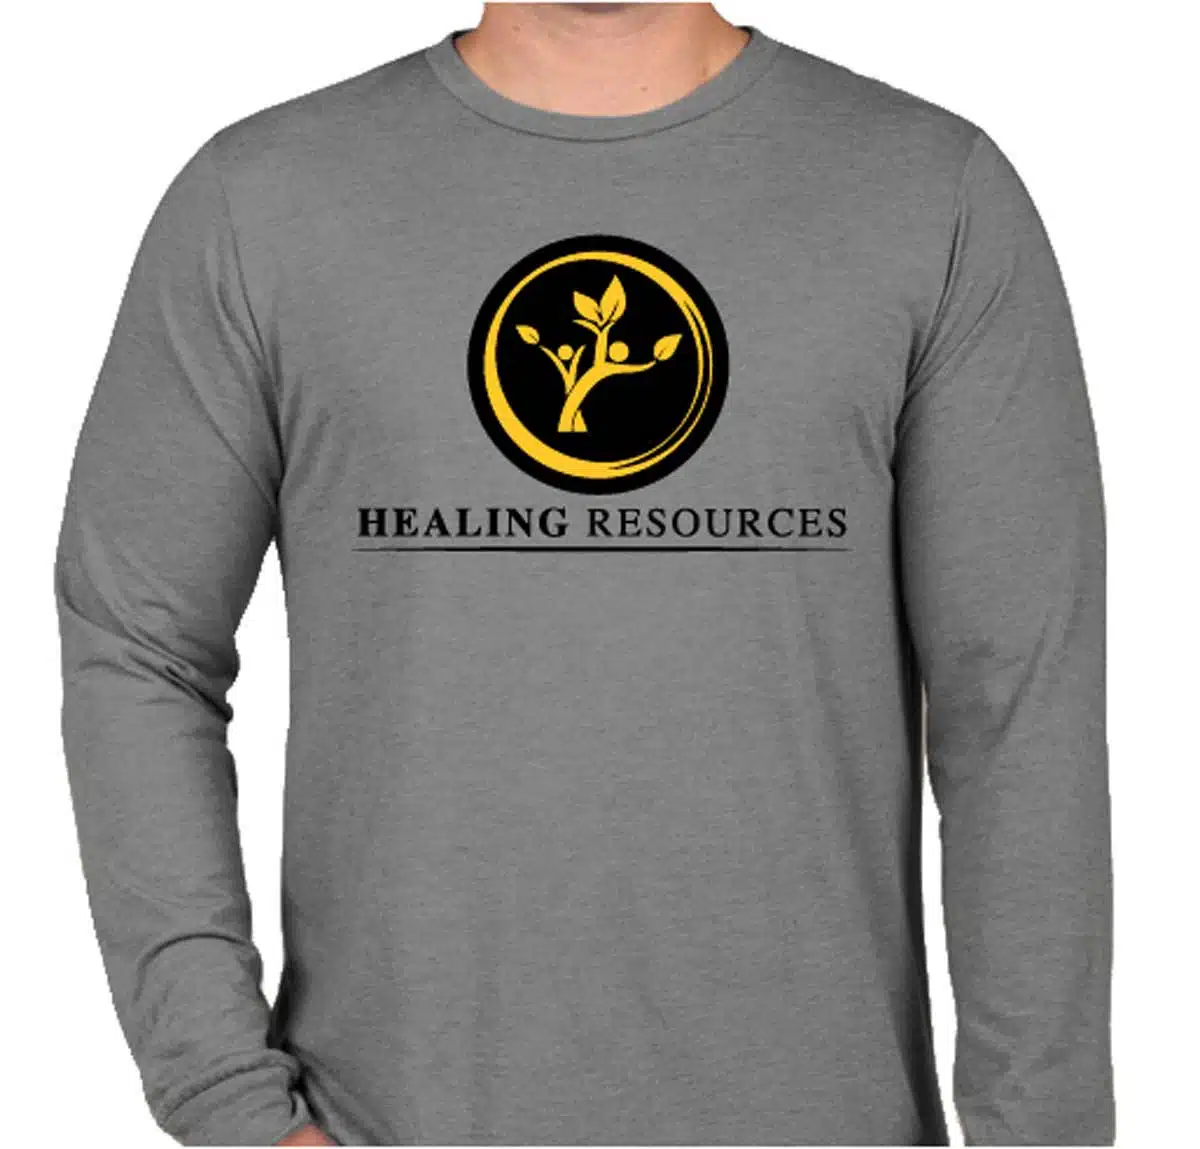 Healing Resources Long Sleeve Shirt